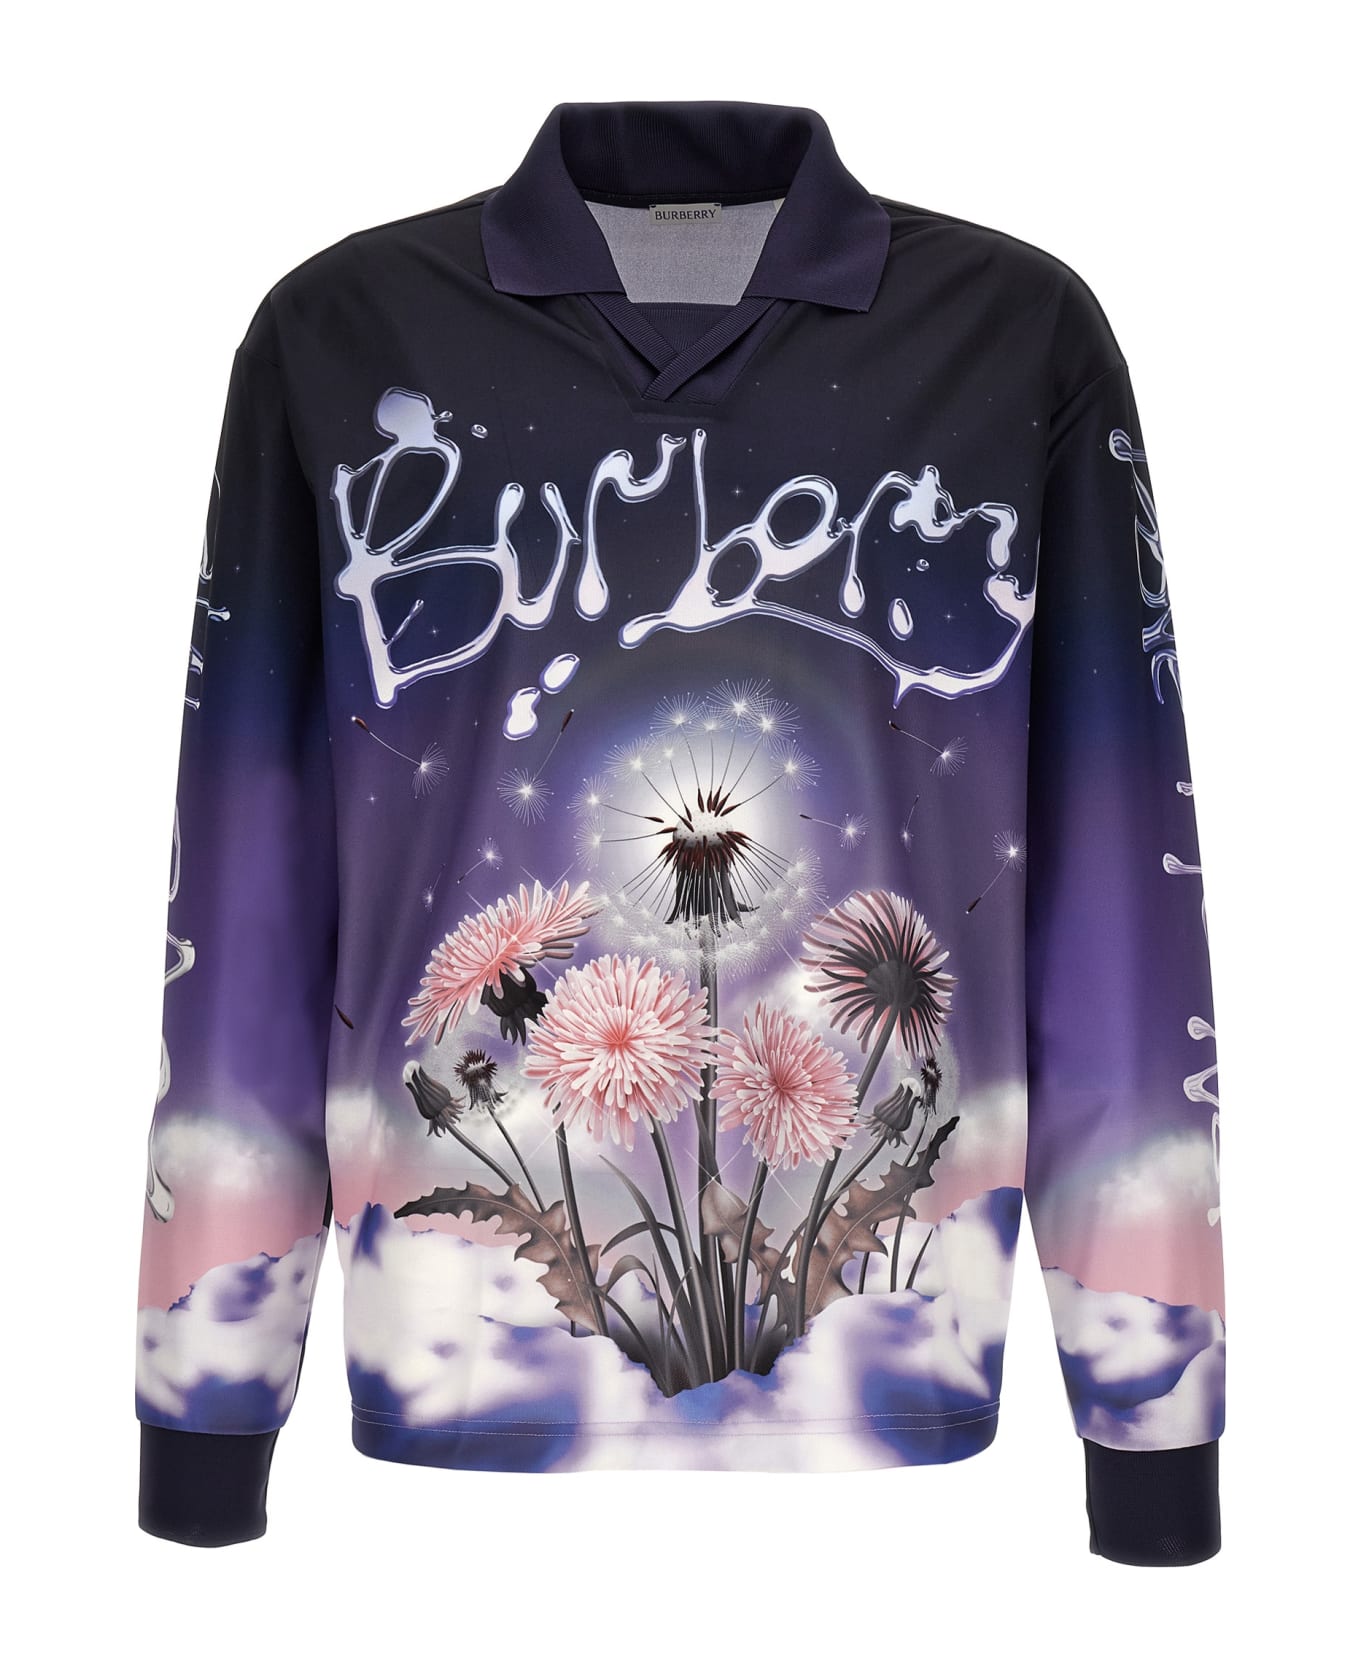 Burberry Dandelions Sweater - Multicolor